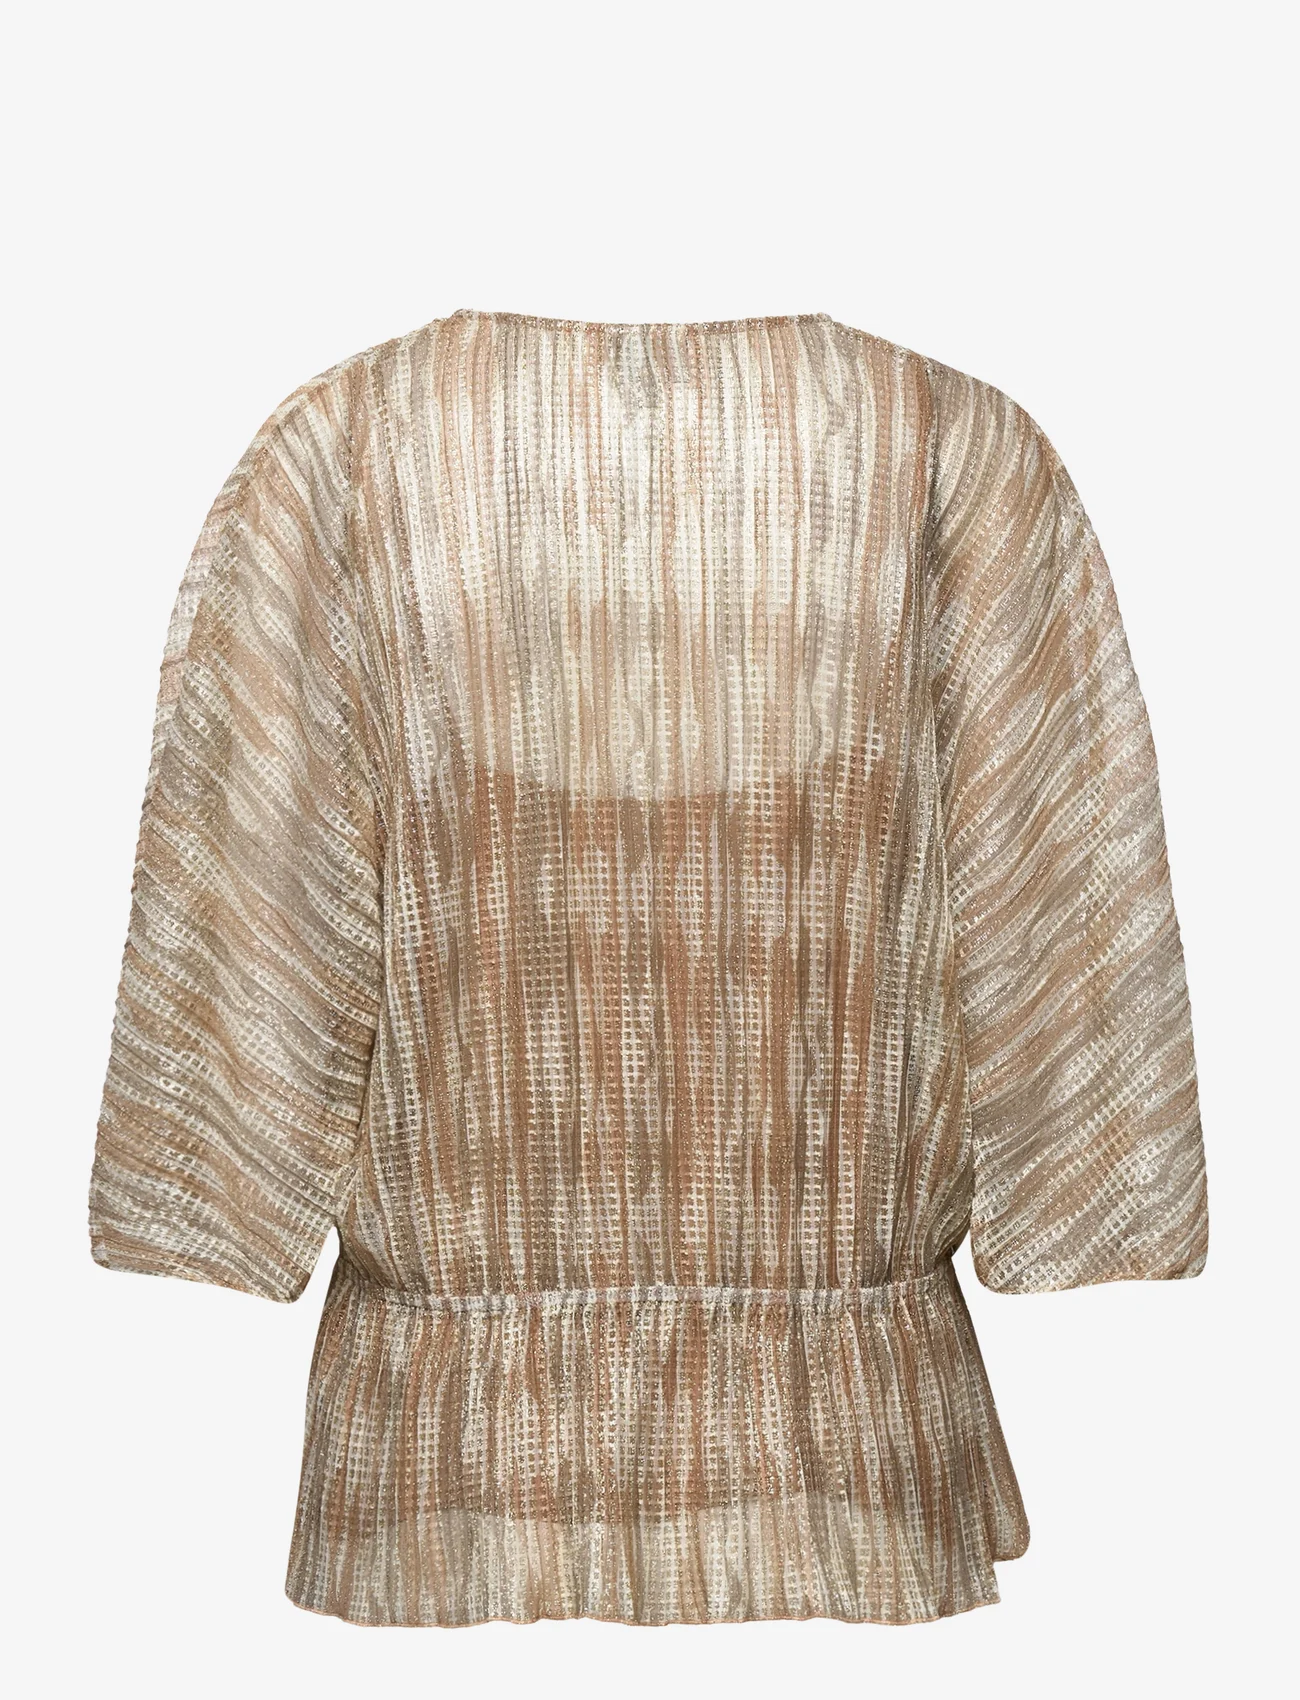 Dante6 - Alaia printed lurex top - long-sleeved blouses - multicolour - 1